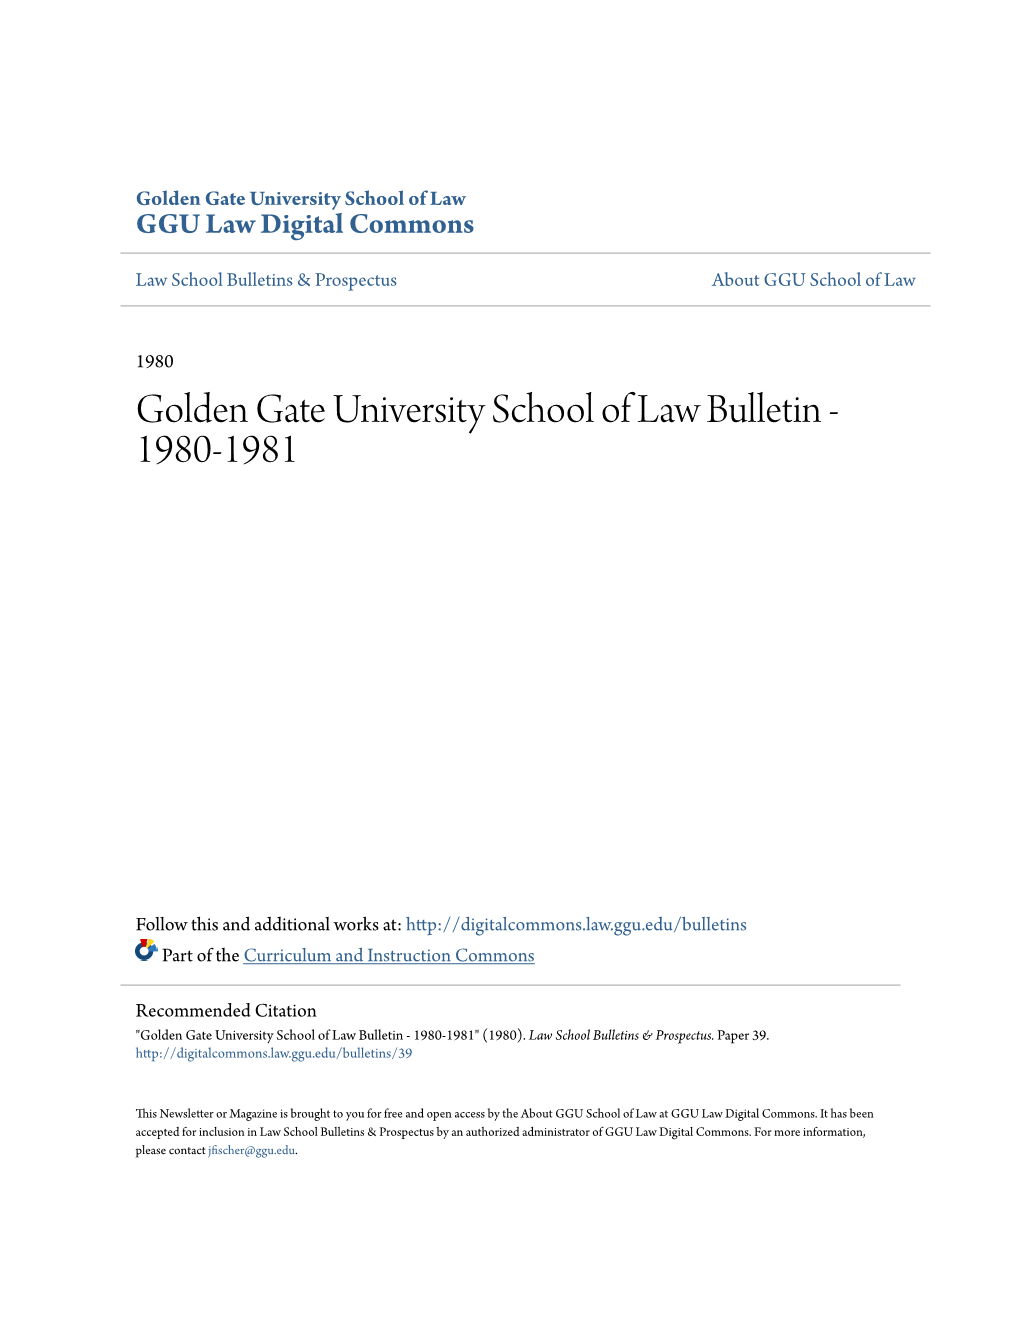 Golden Gate University School of Law Bulletin - 1980-1981